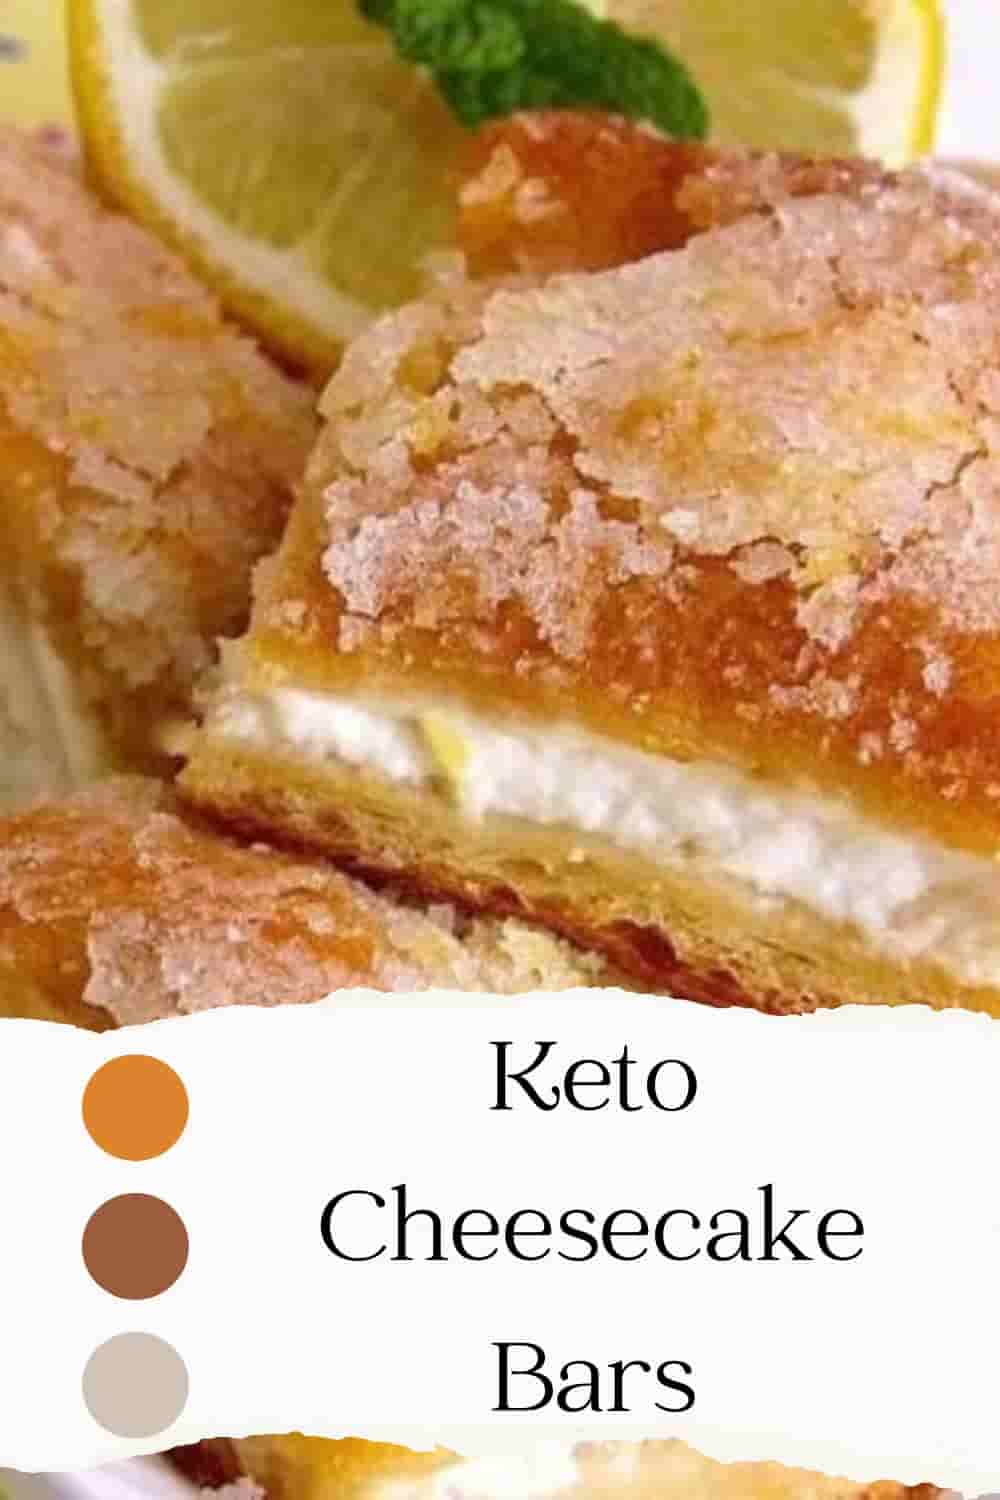 Keto Cheesecake Bars